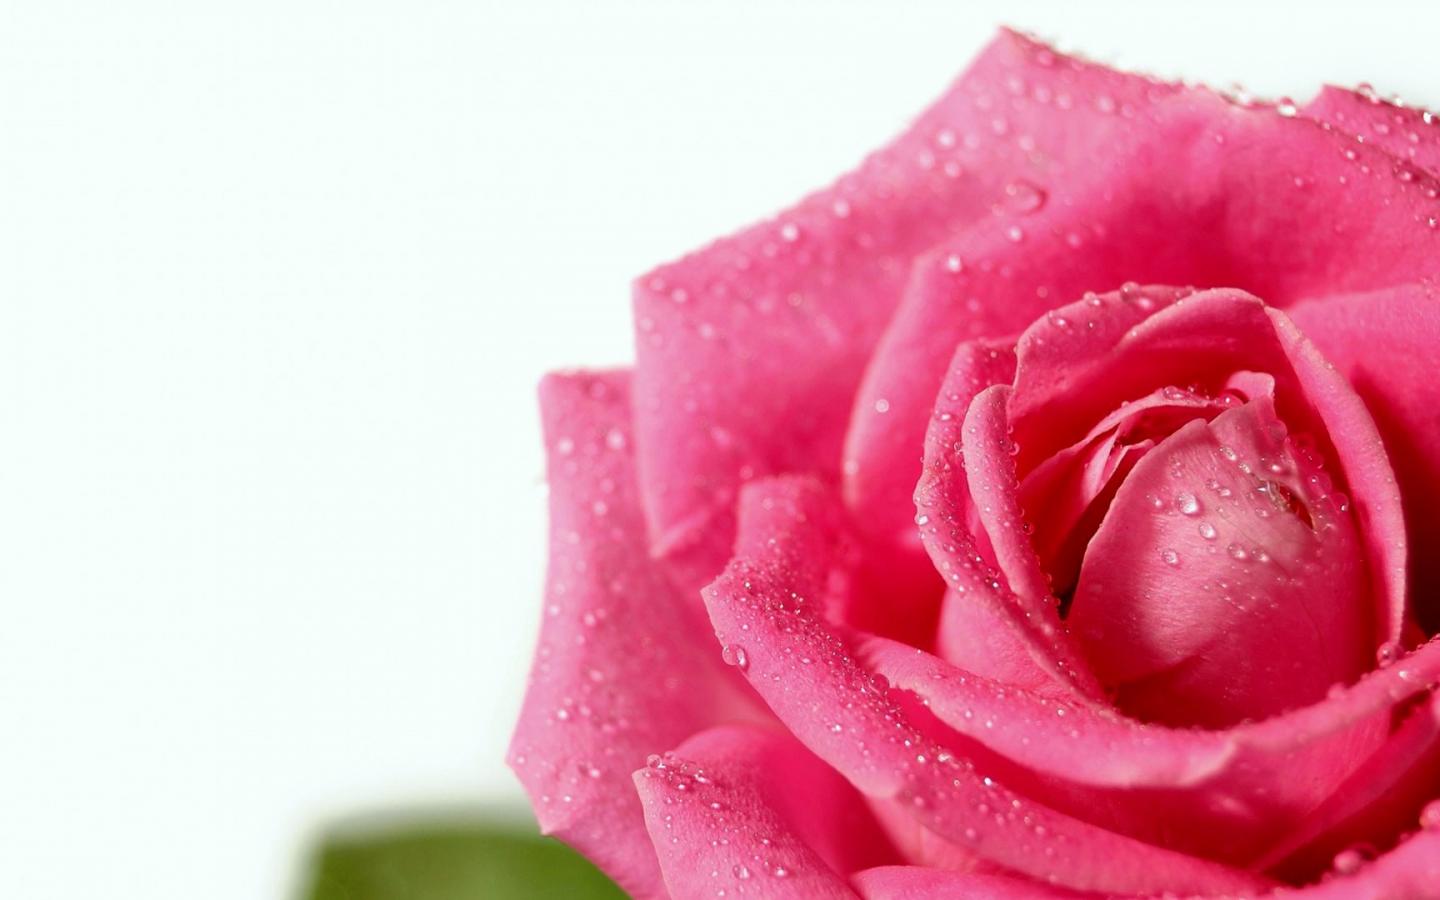 Dew drops on a scarlet rose 1440x900